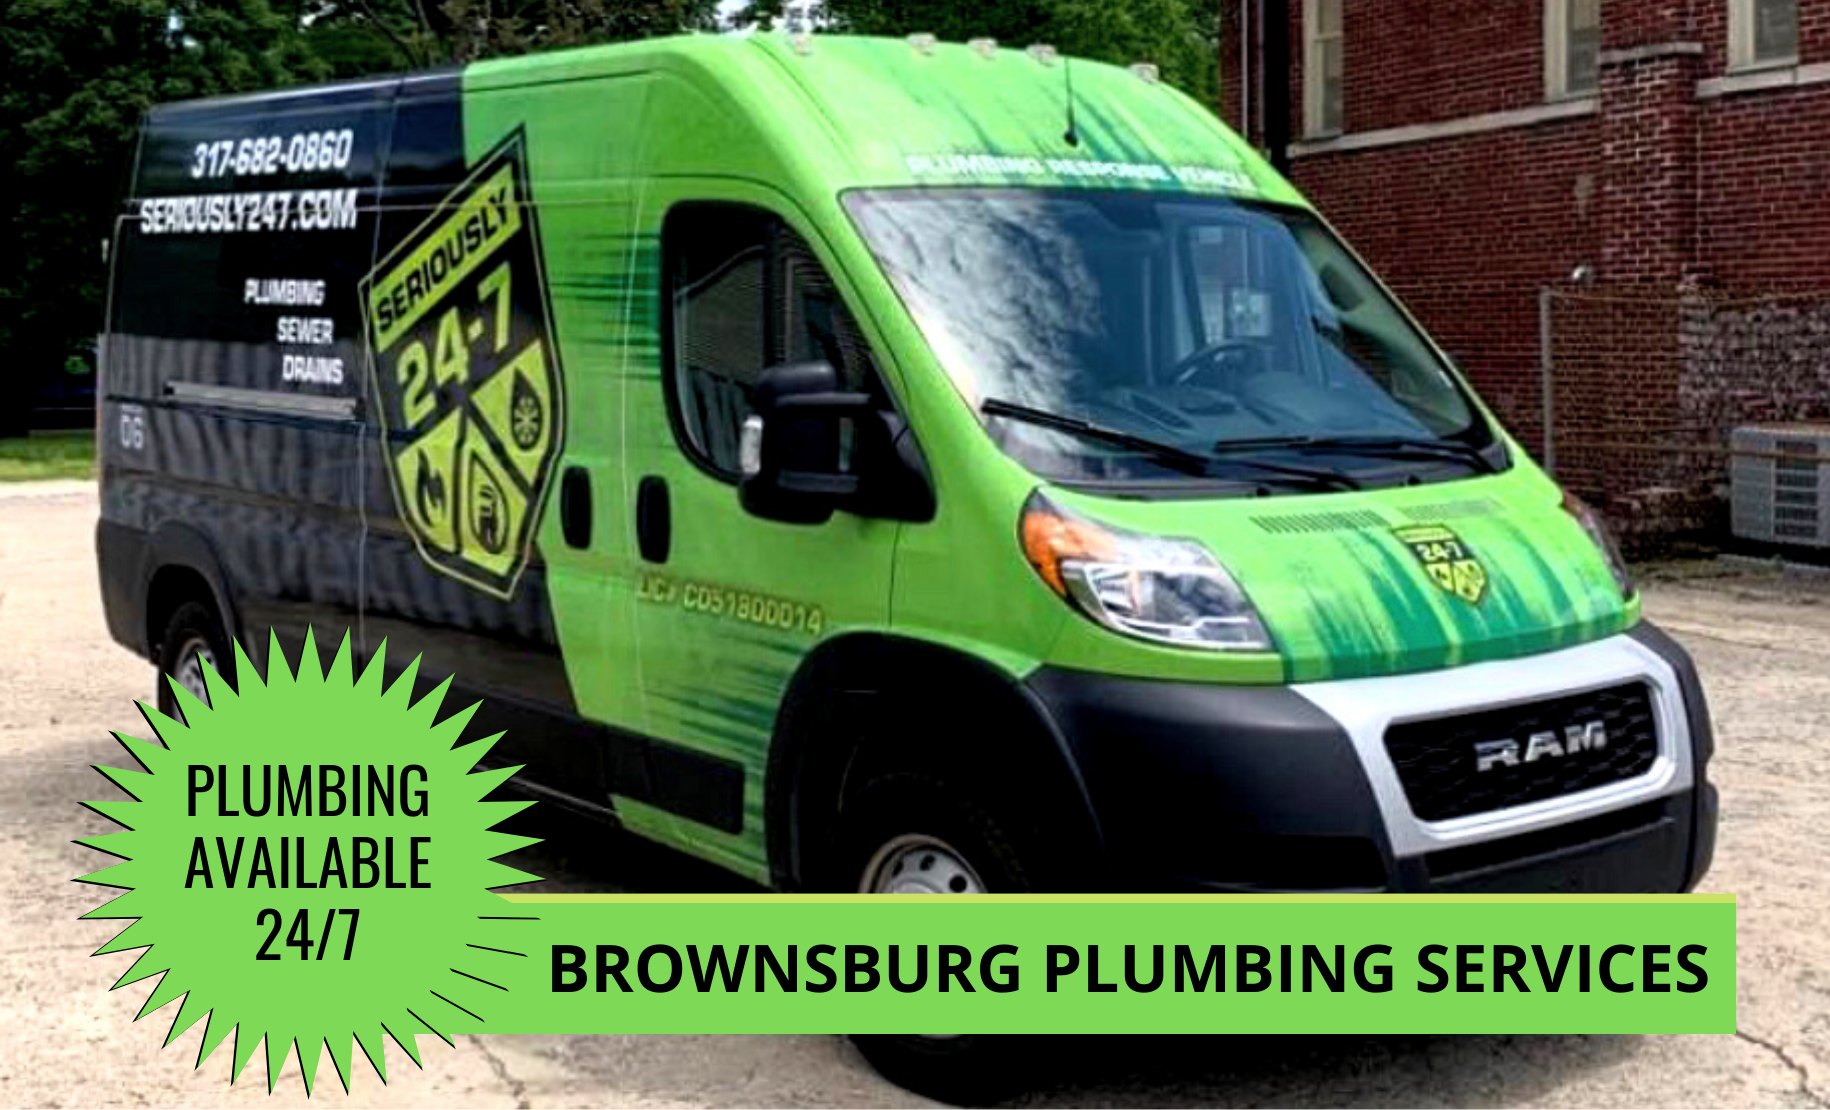 Brownsburg Plumbing Services